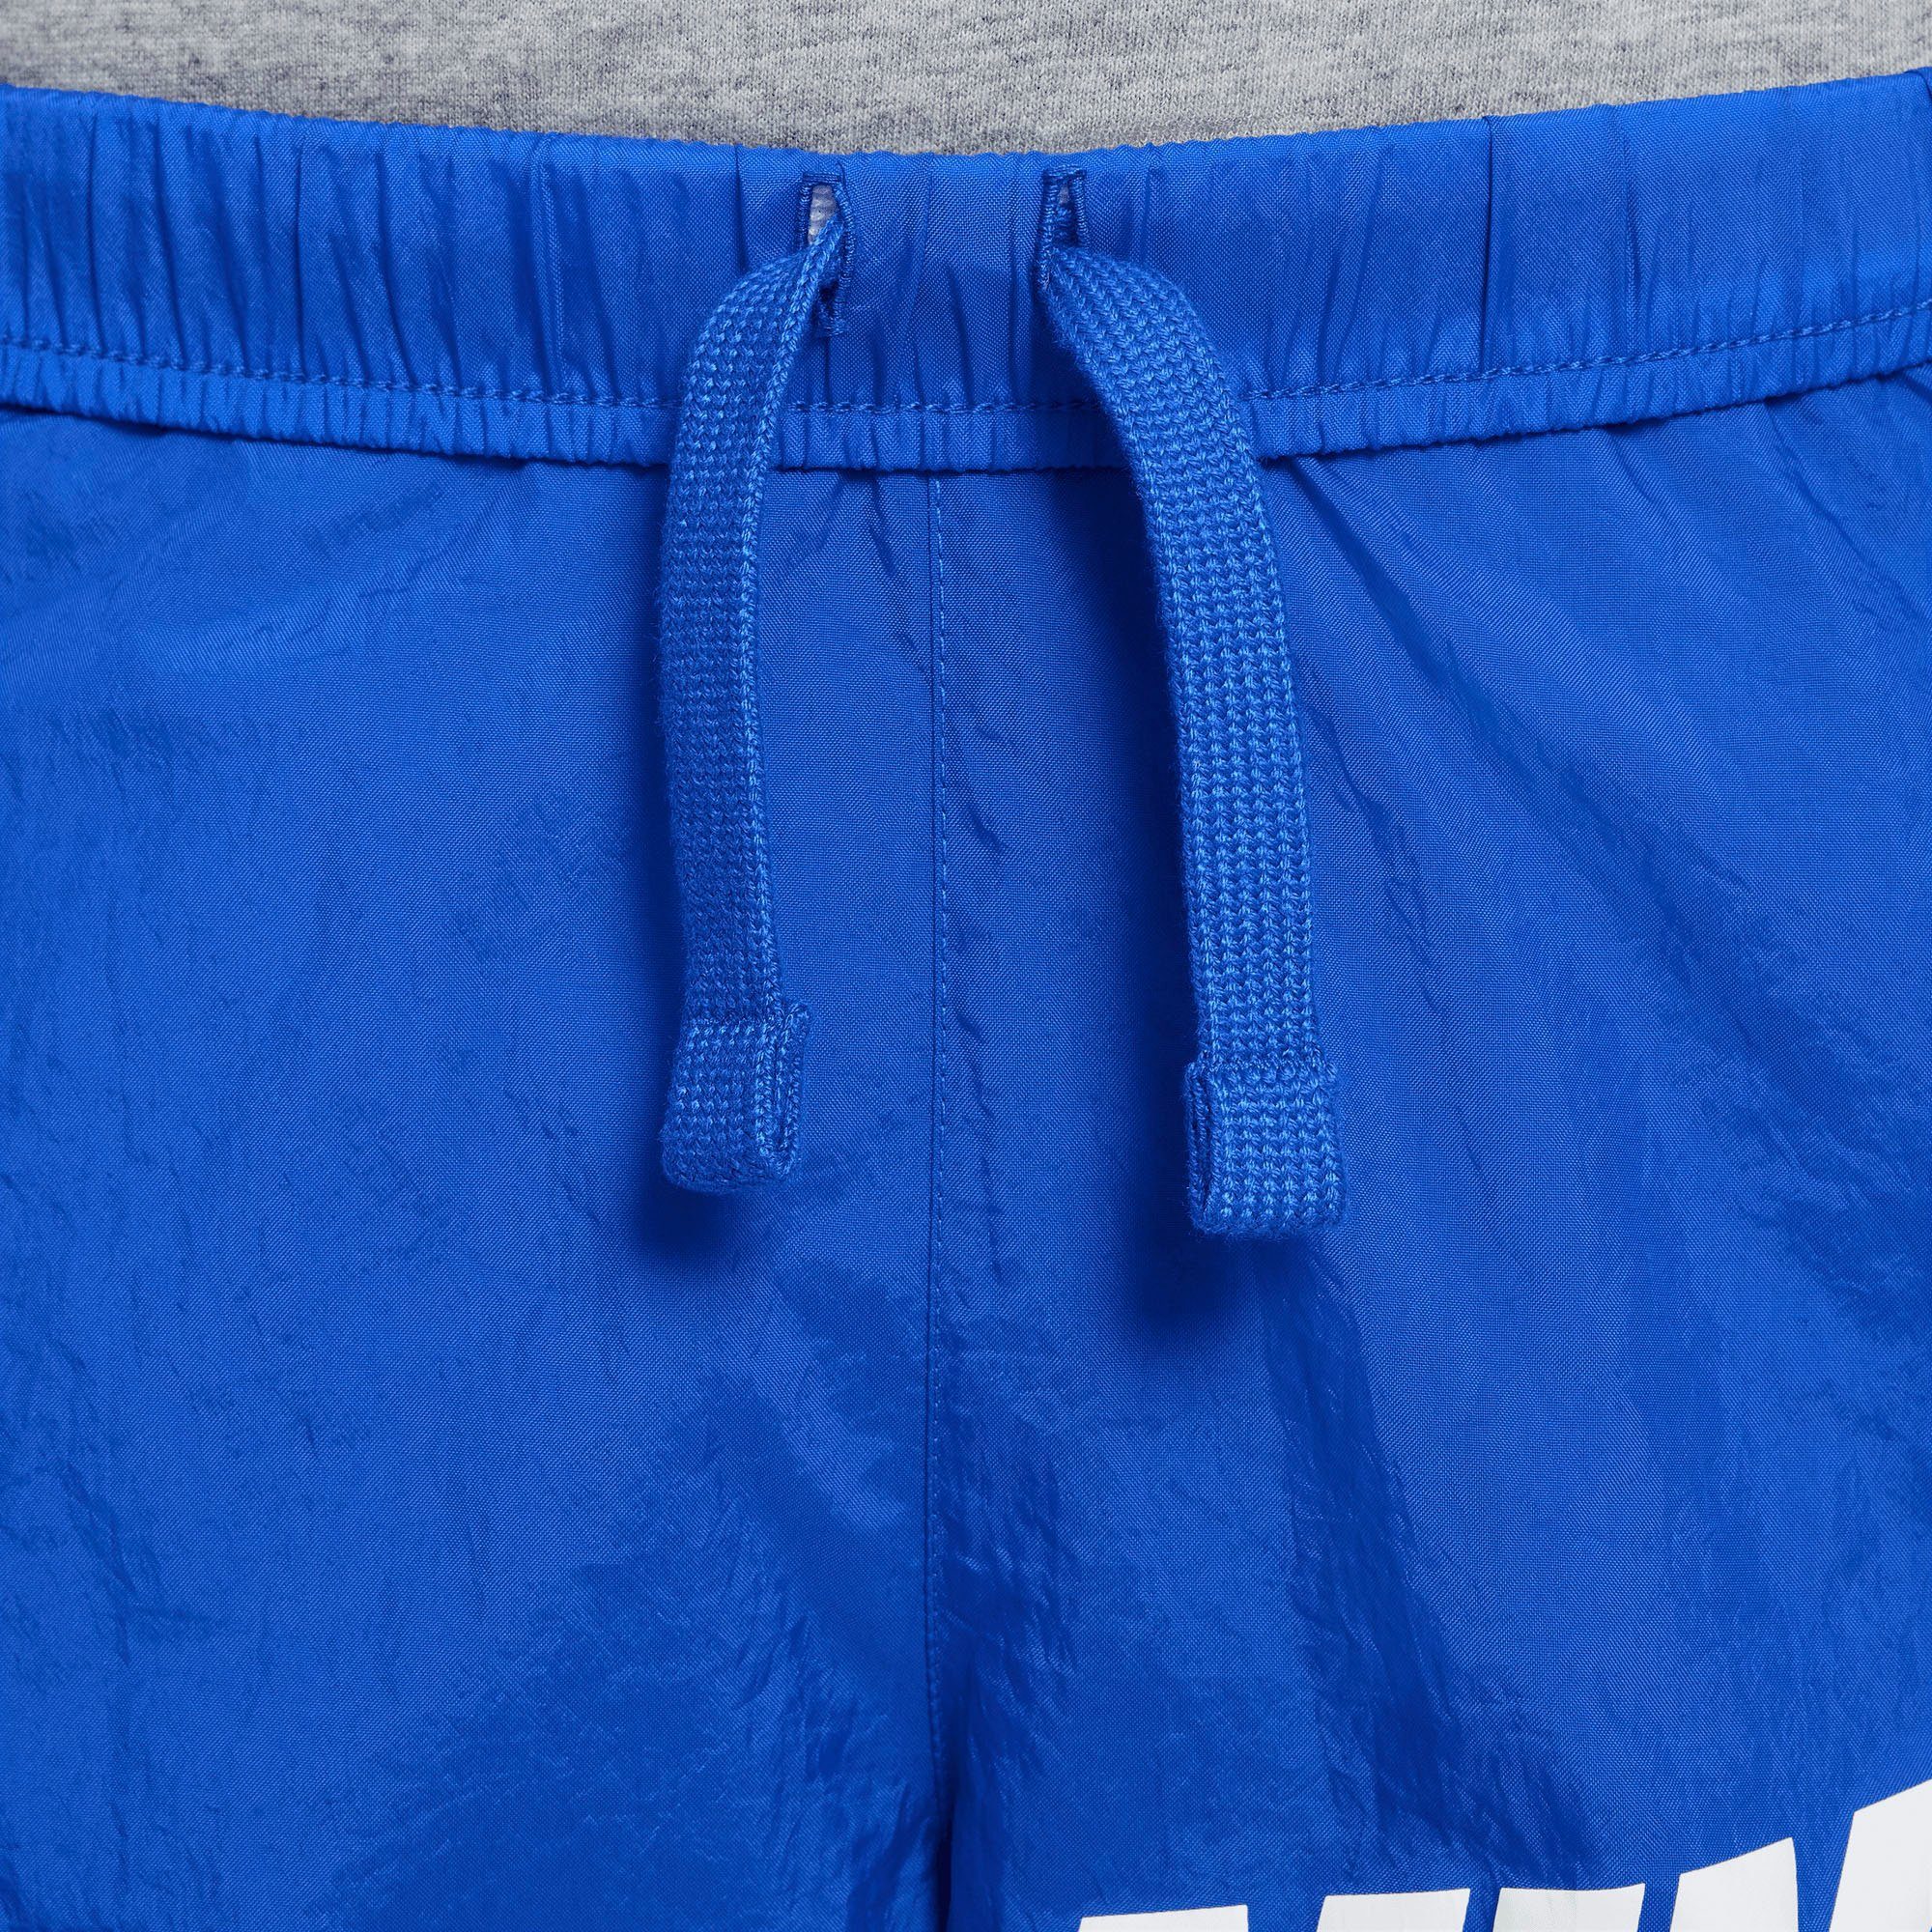 Shorts Big Sportswear Kids' (Boys) Nike blau Shorts Woven